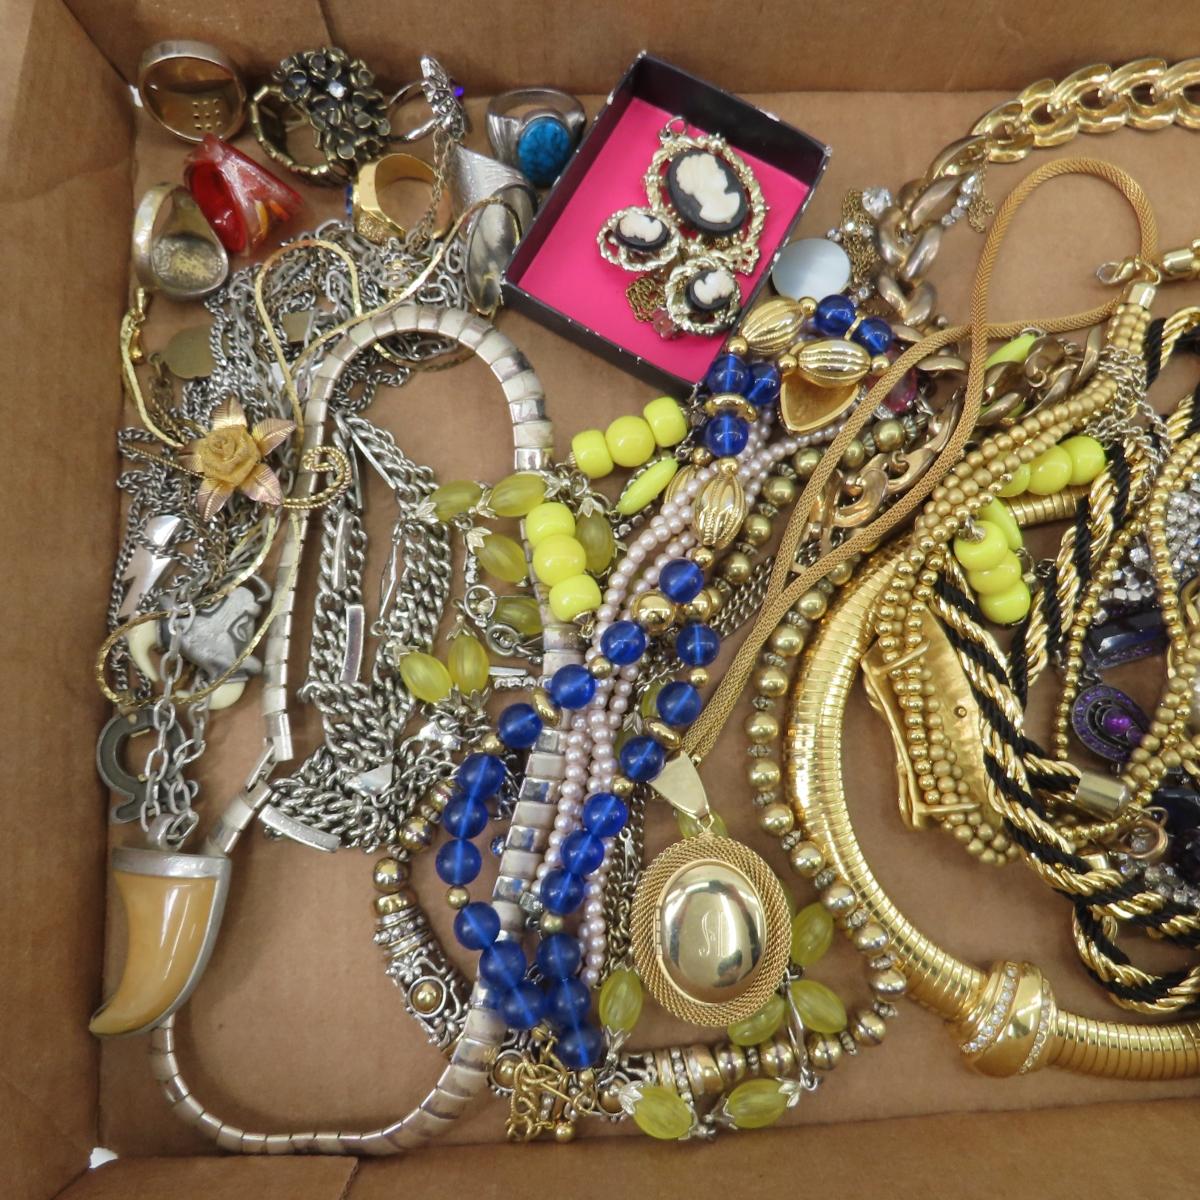 Fashion Jewelry sets, necklaces, bracelets & more